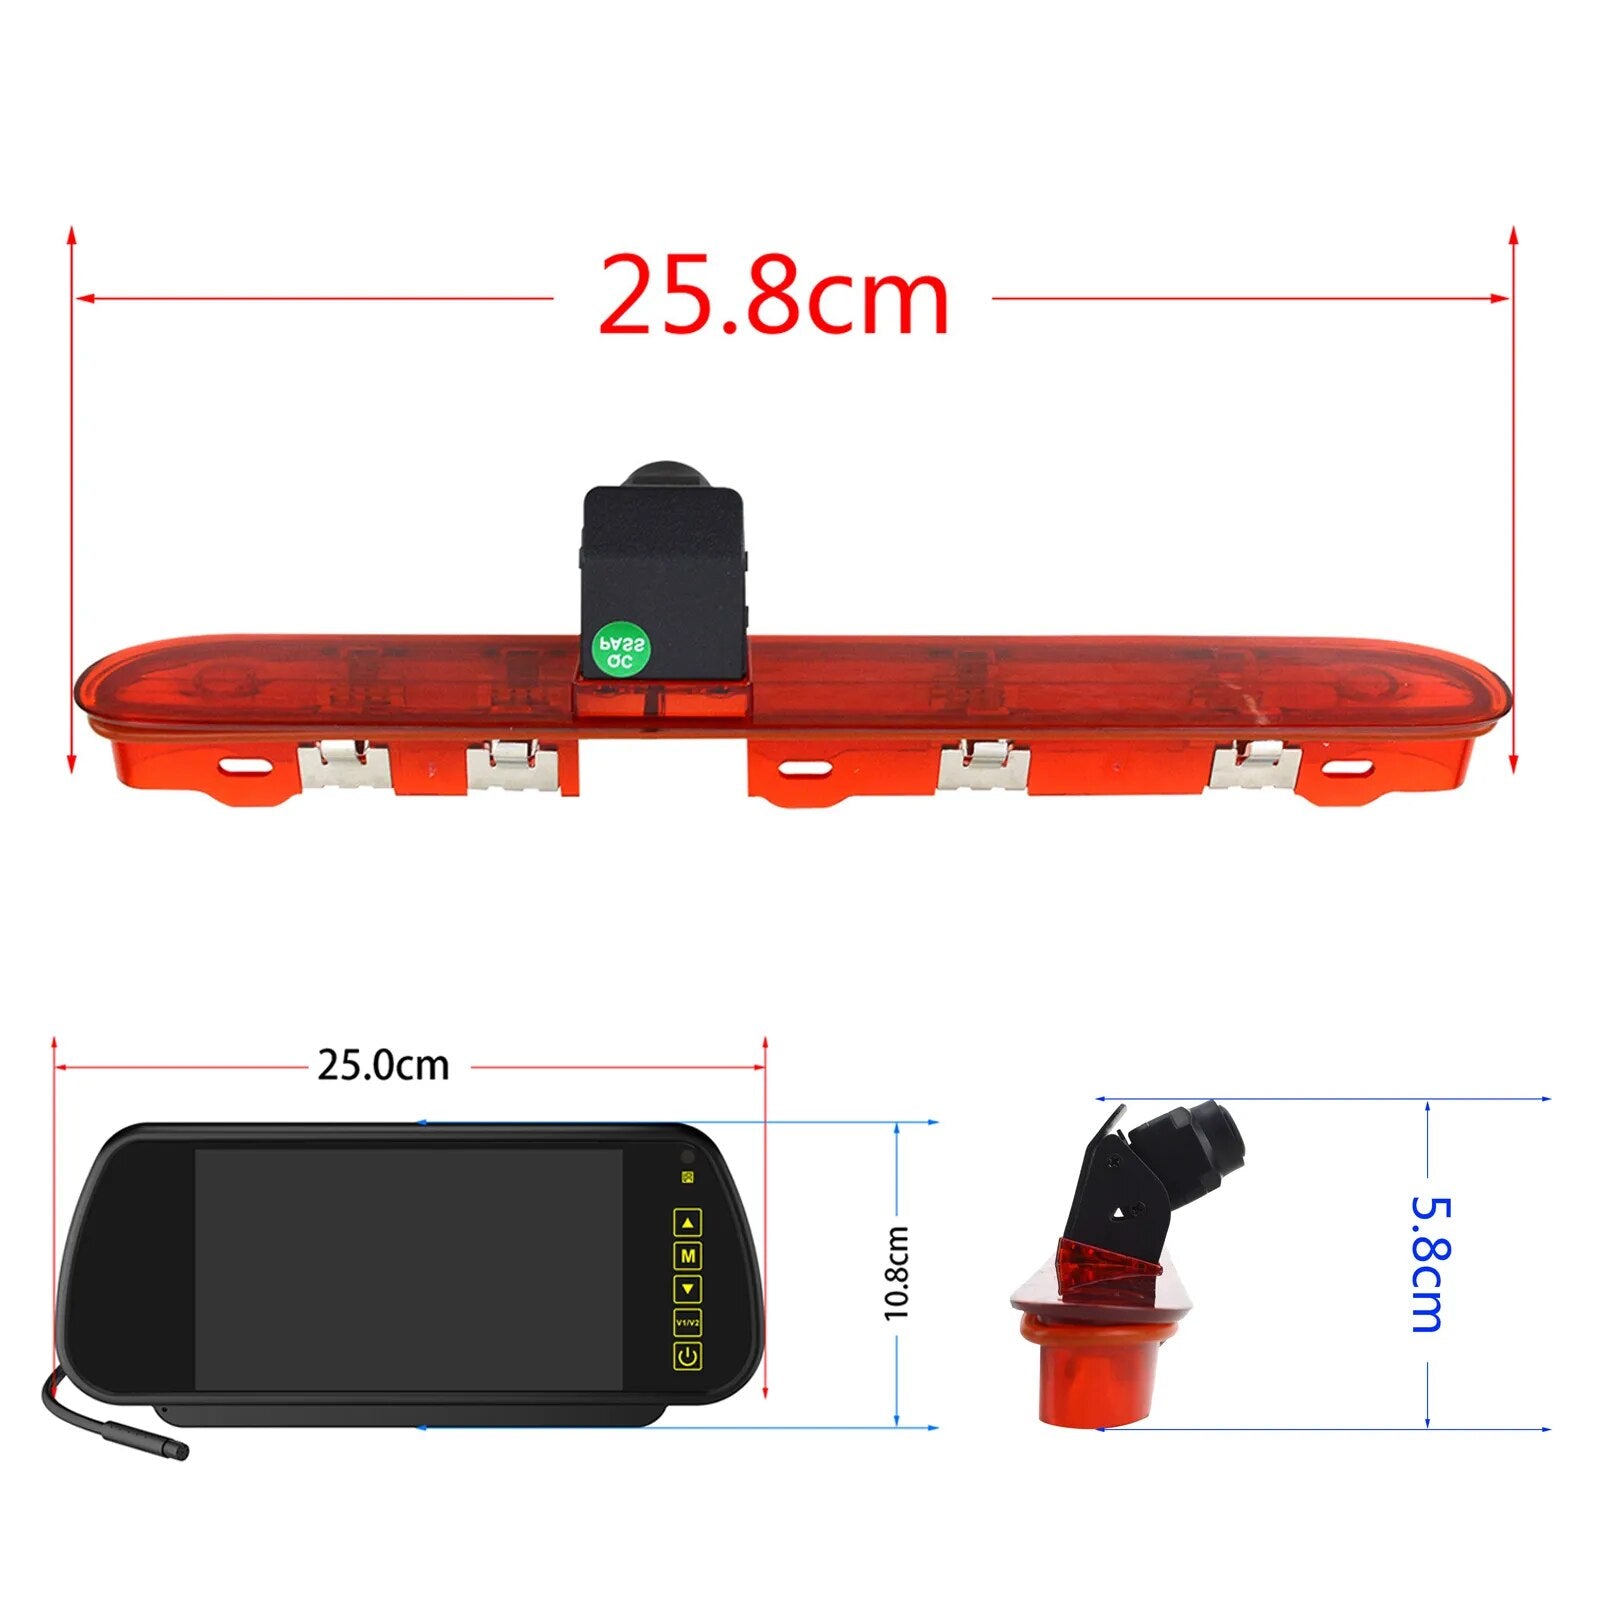 EnruigeOK Car Reversing Brake Light Camera Parking Camera Surveillance Kit With 7 inch Mirror Monitor for Peugeot Expert